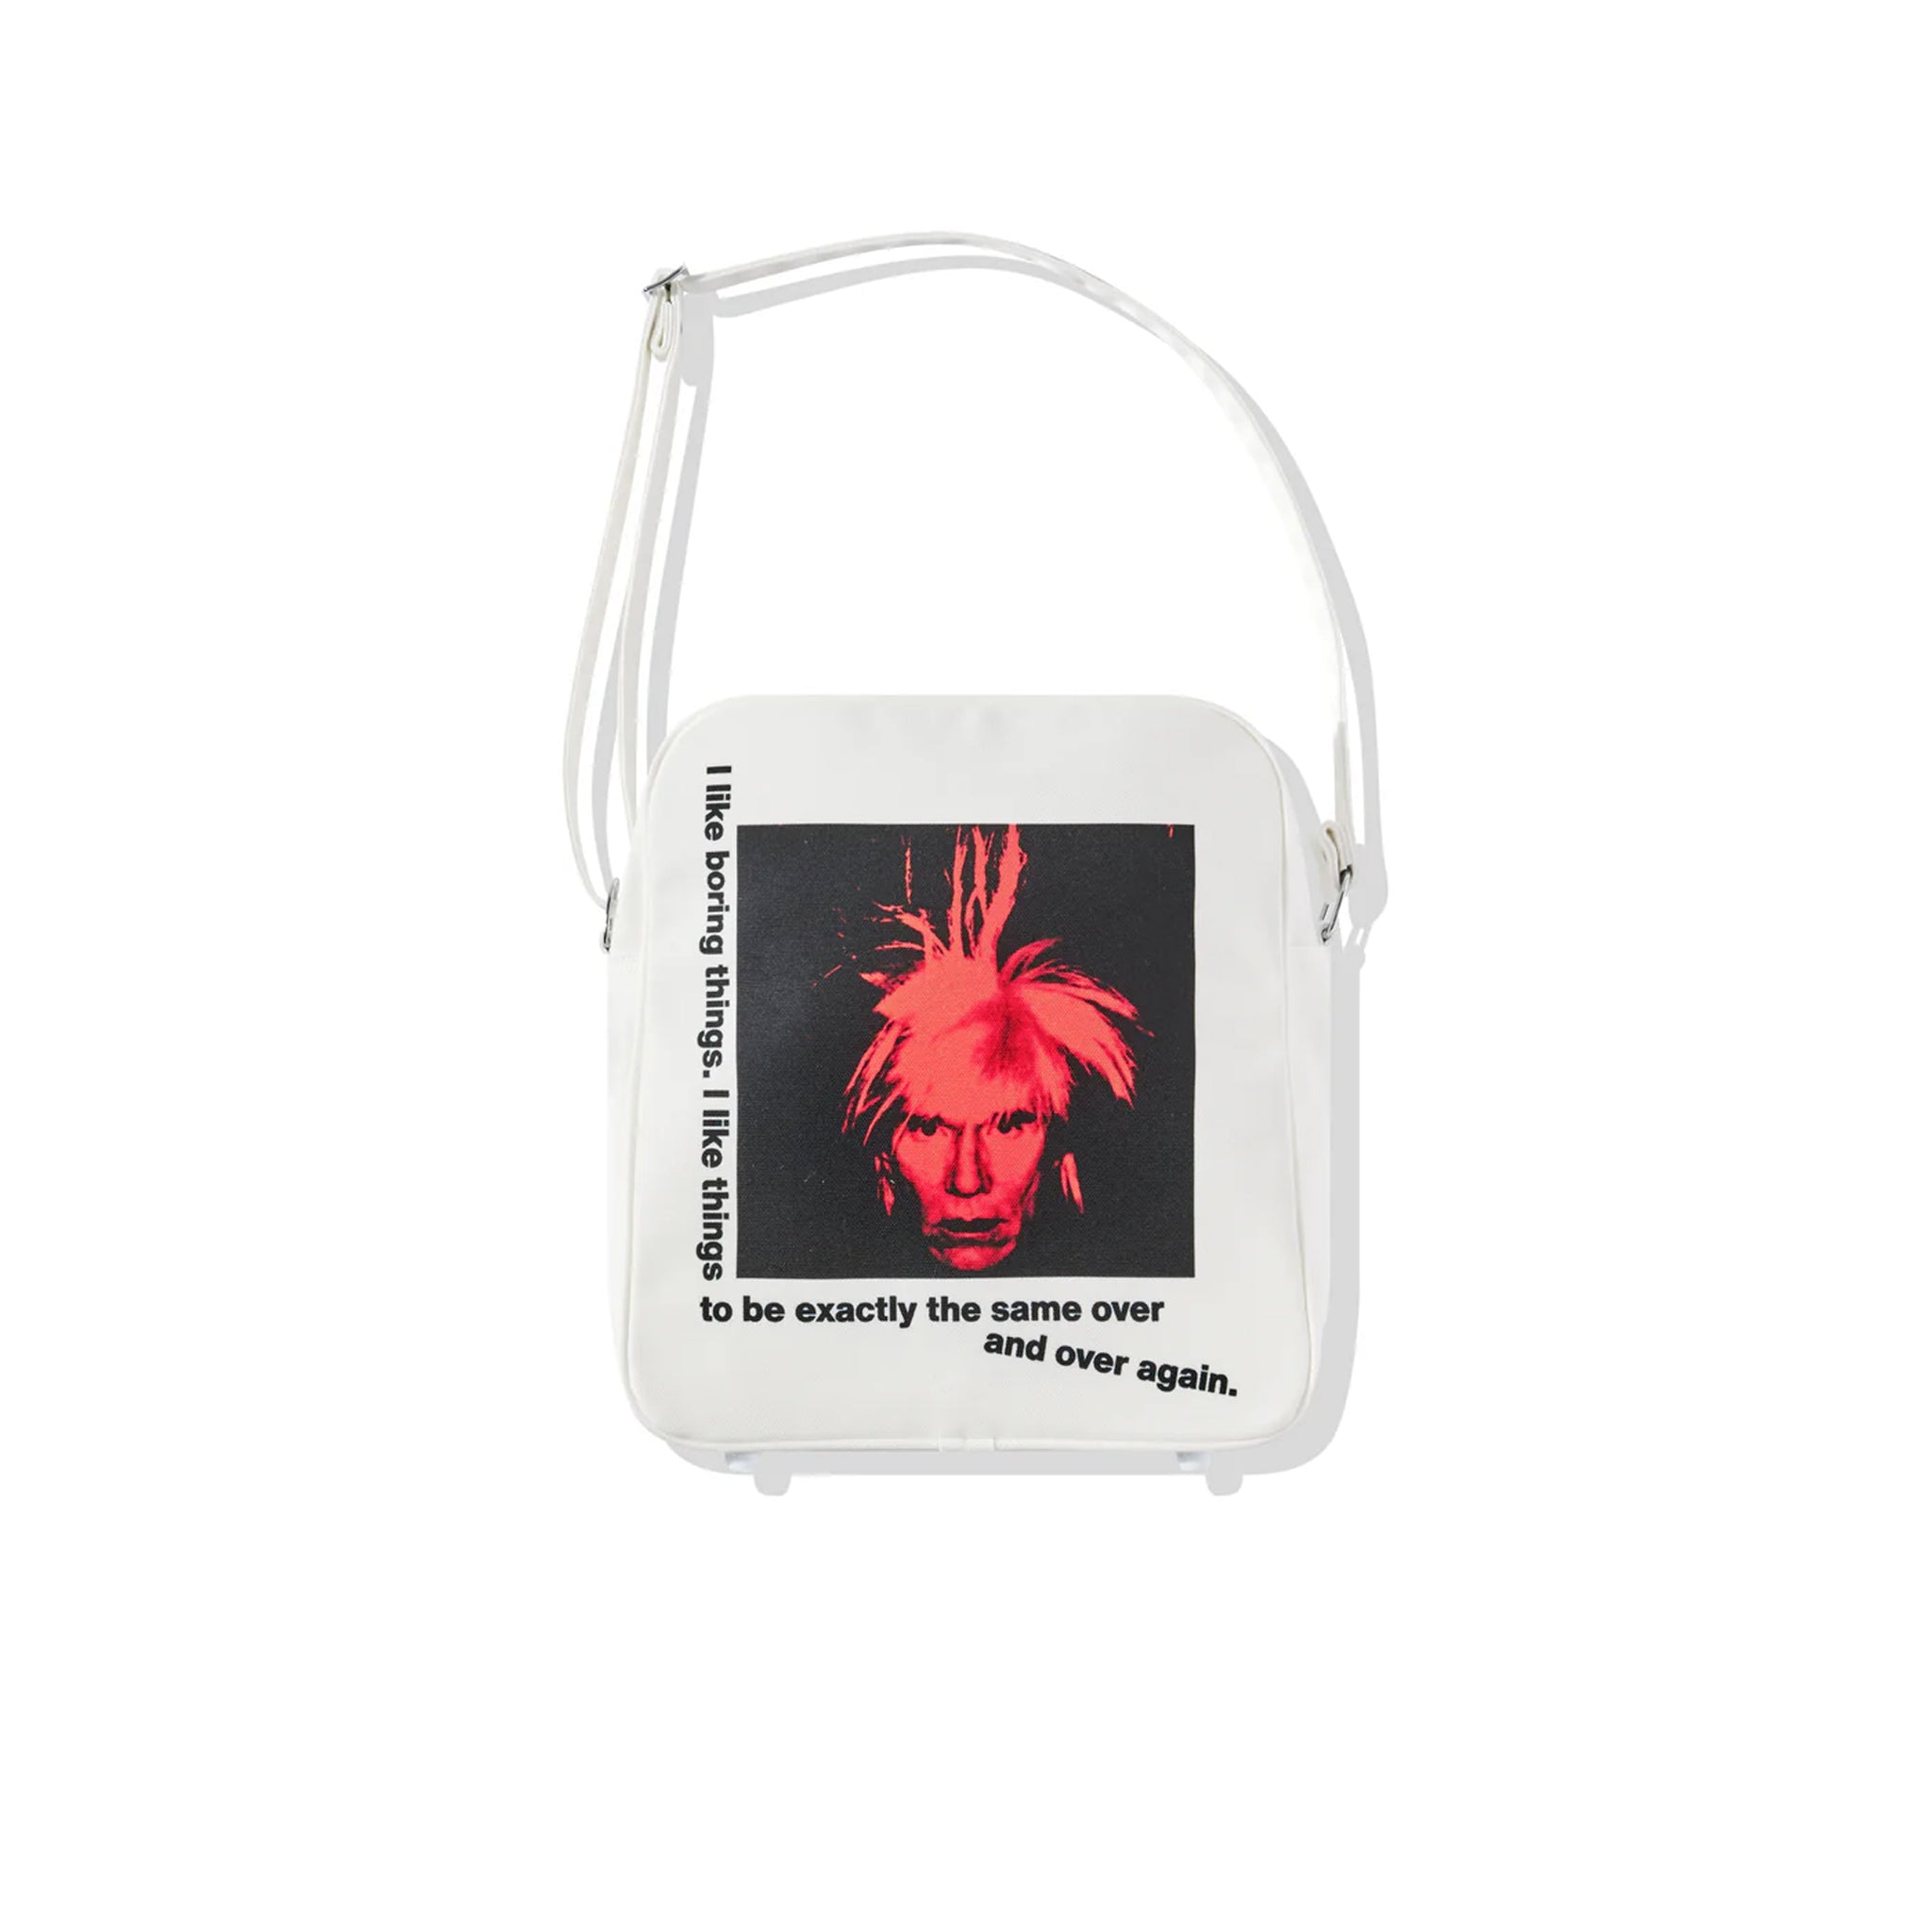 Andy Warhol Portrait Bag